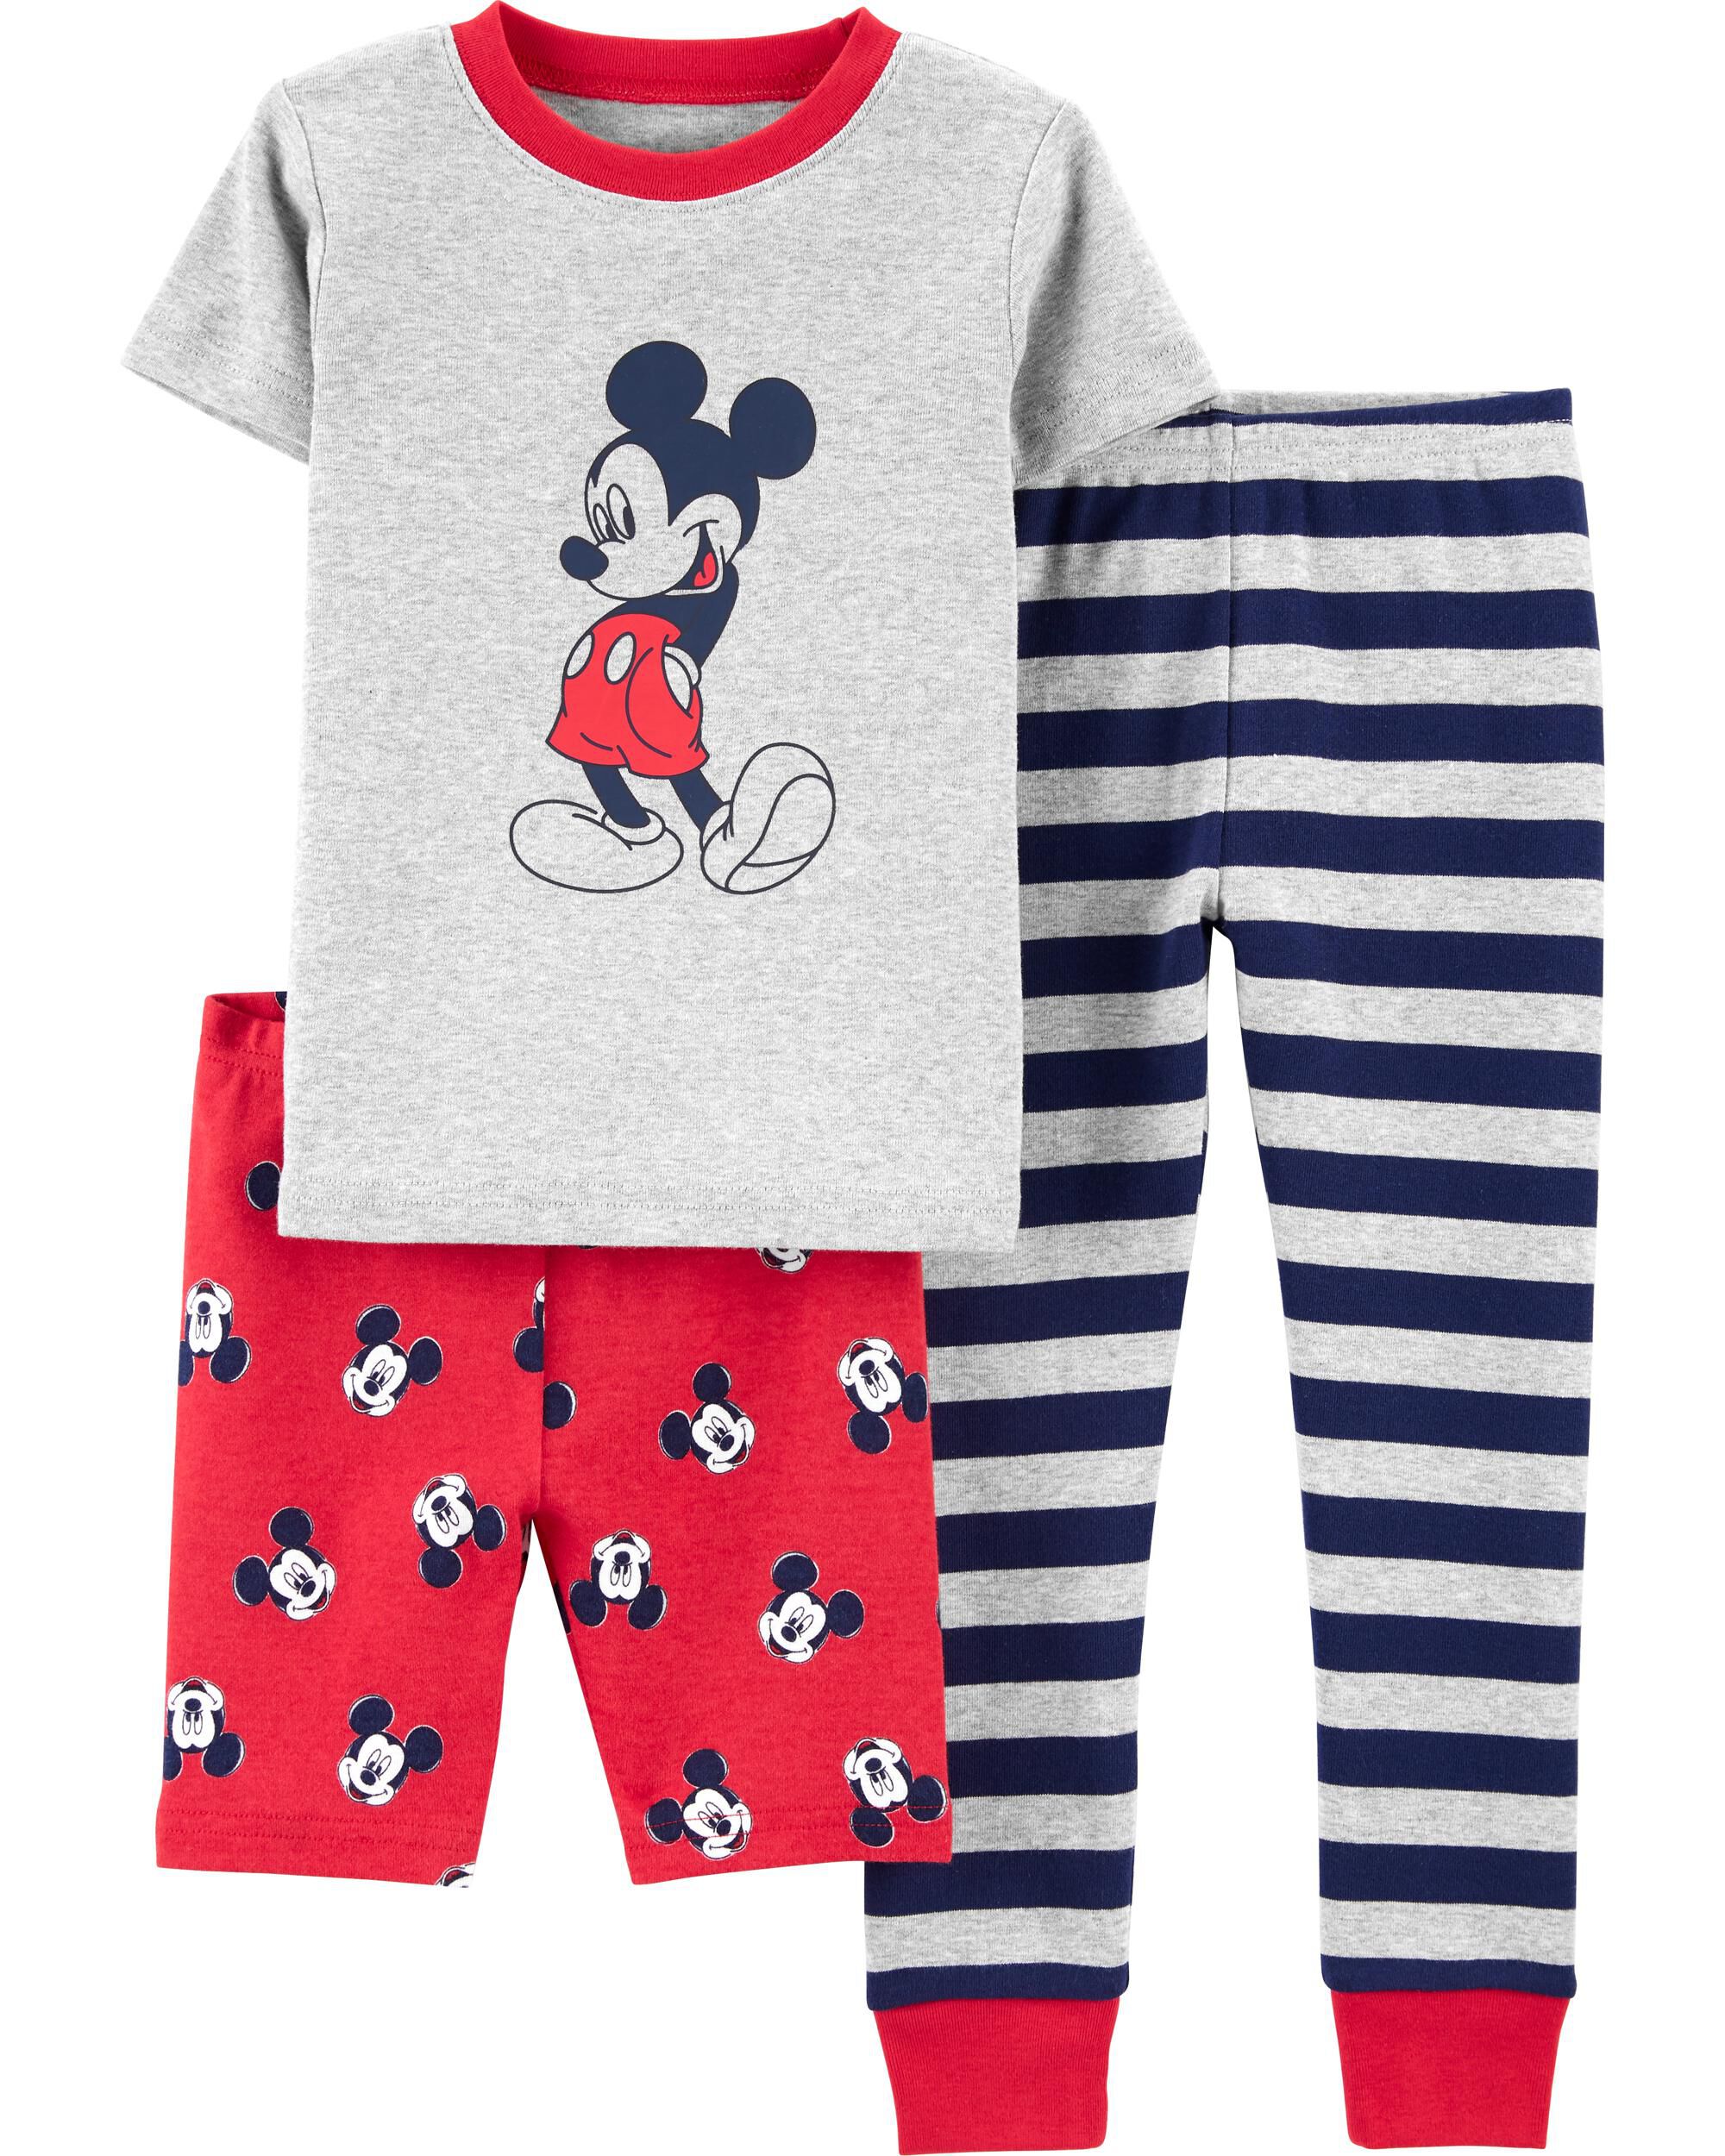 Gap Baby Boy Toddler PJ Sleepwear Pajamas Mickey Mouse Navy Blue Red Size 3T 